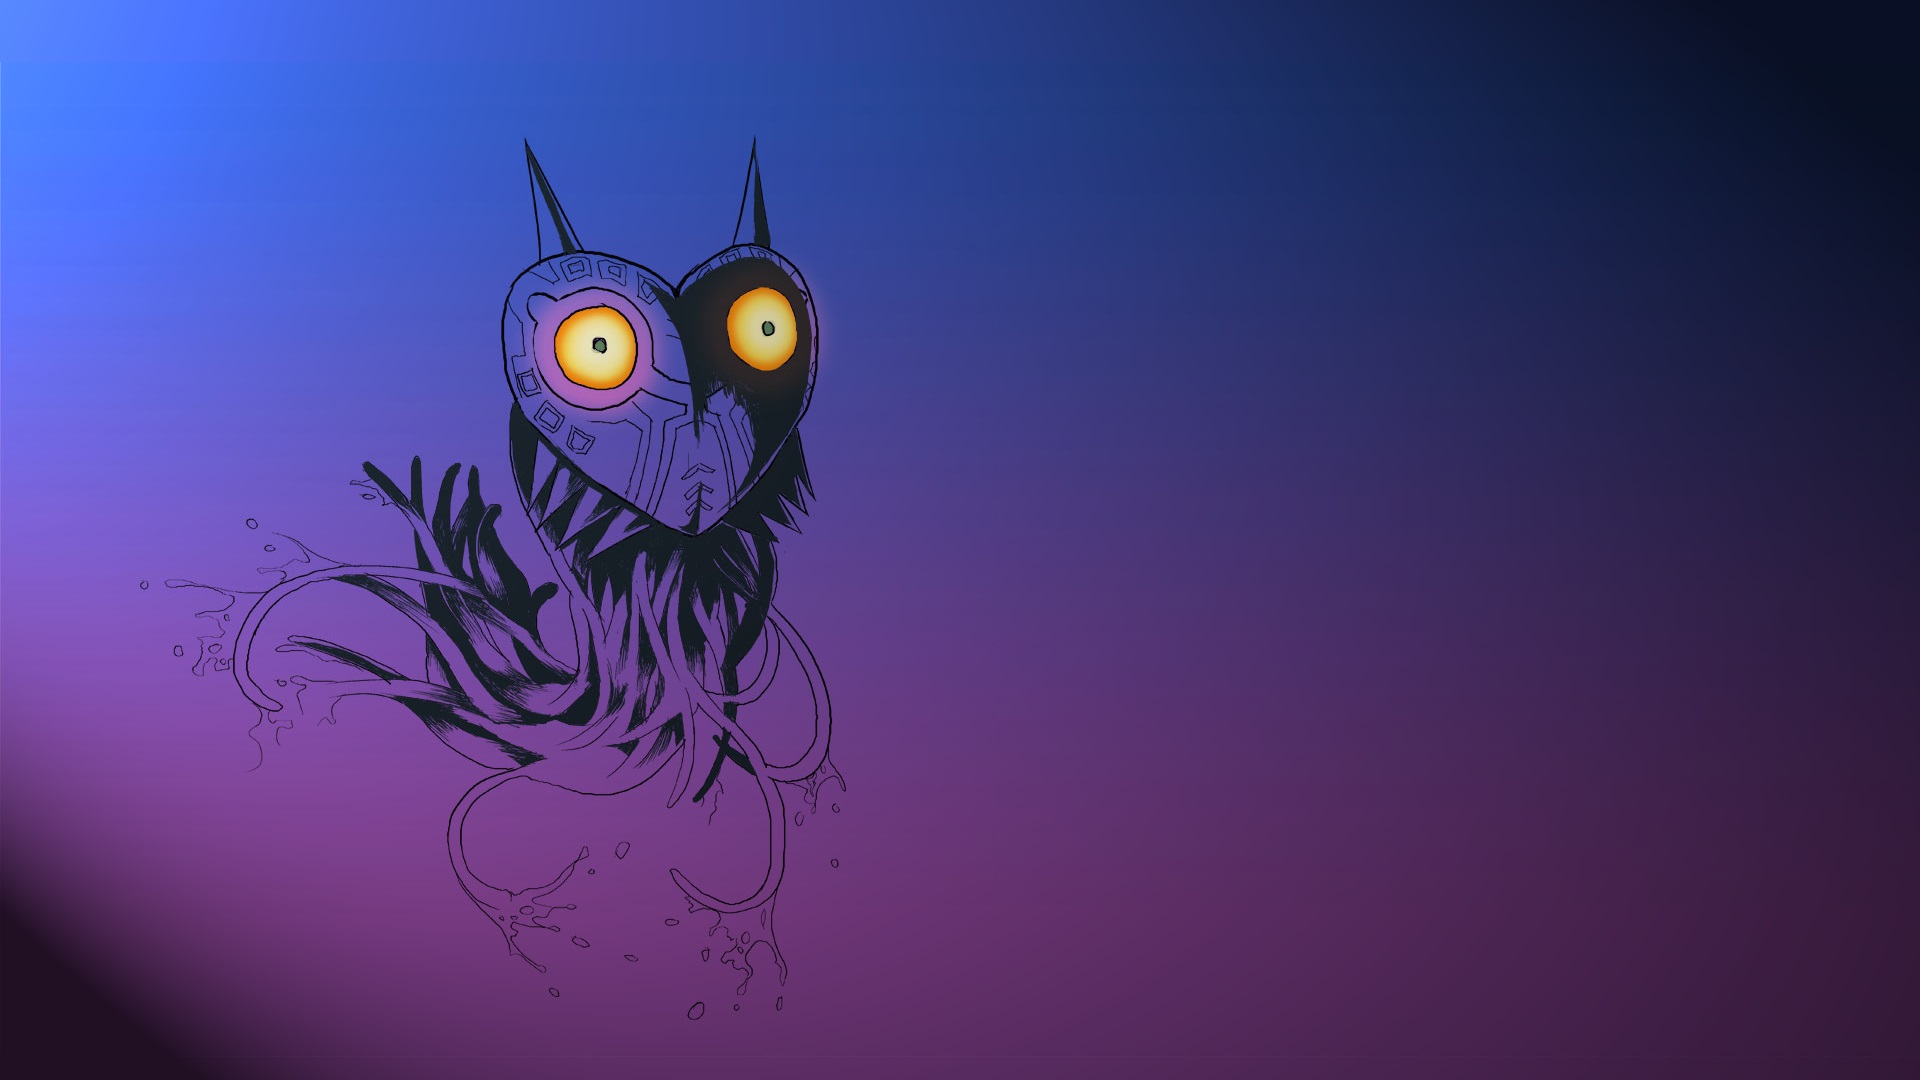 majora's mask wallpaper,owl,illustration,violet,purple,cartoon